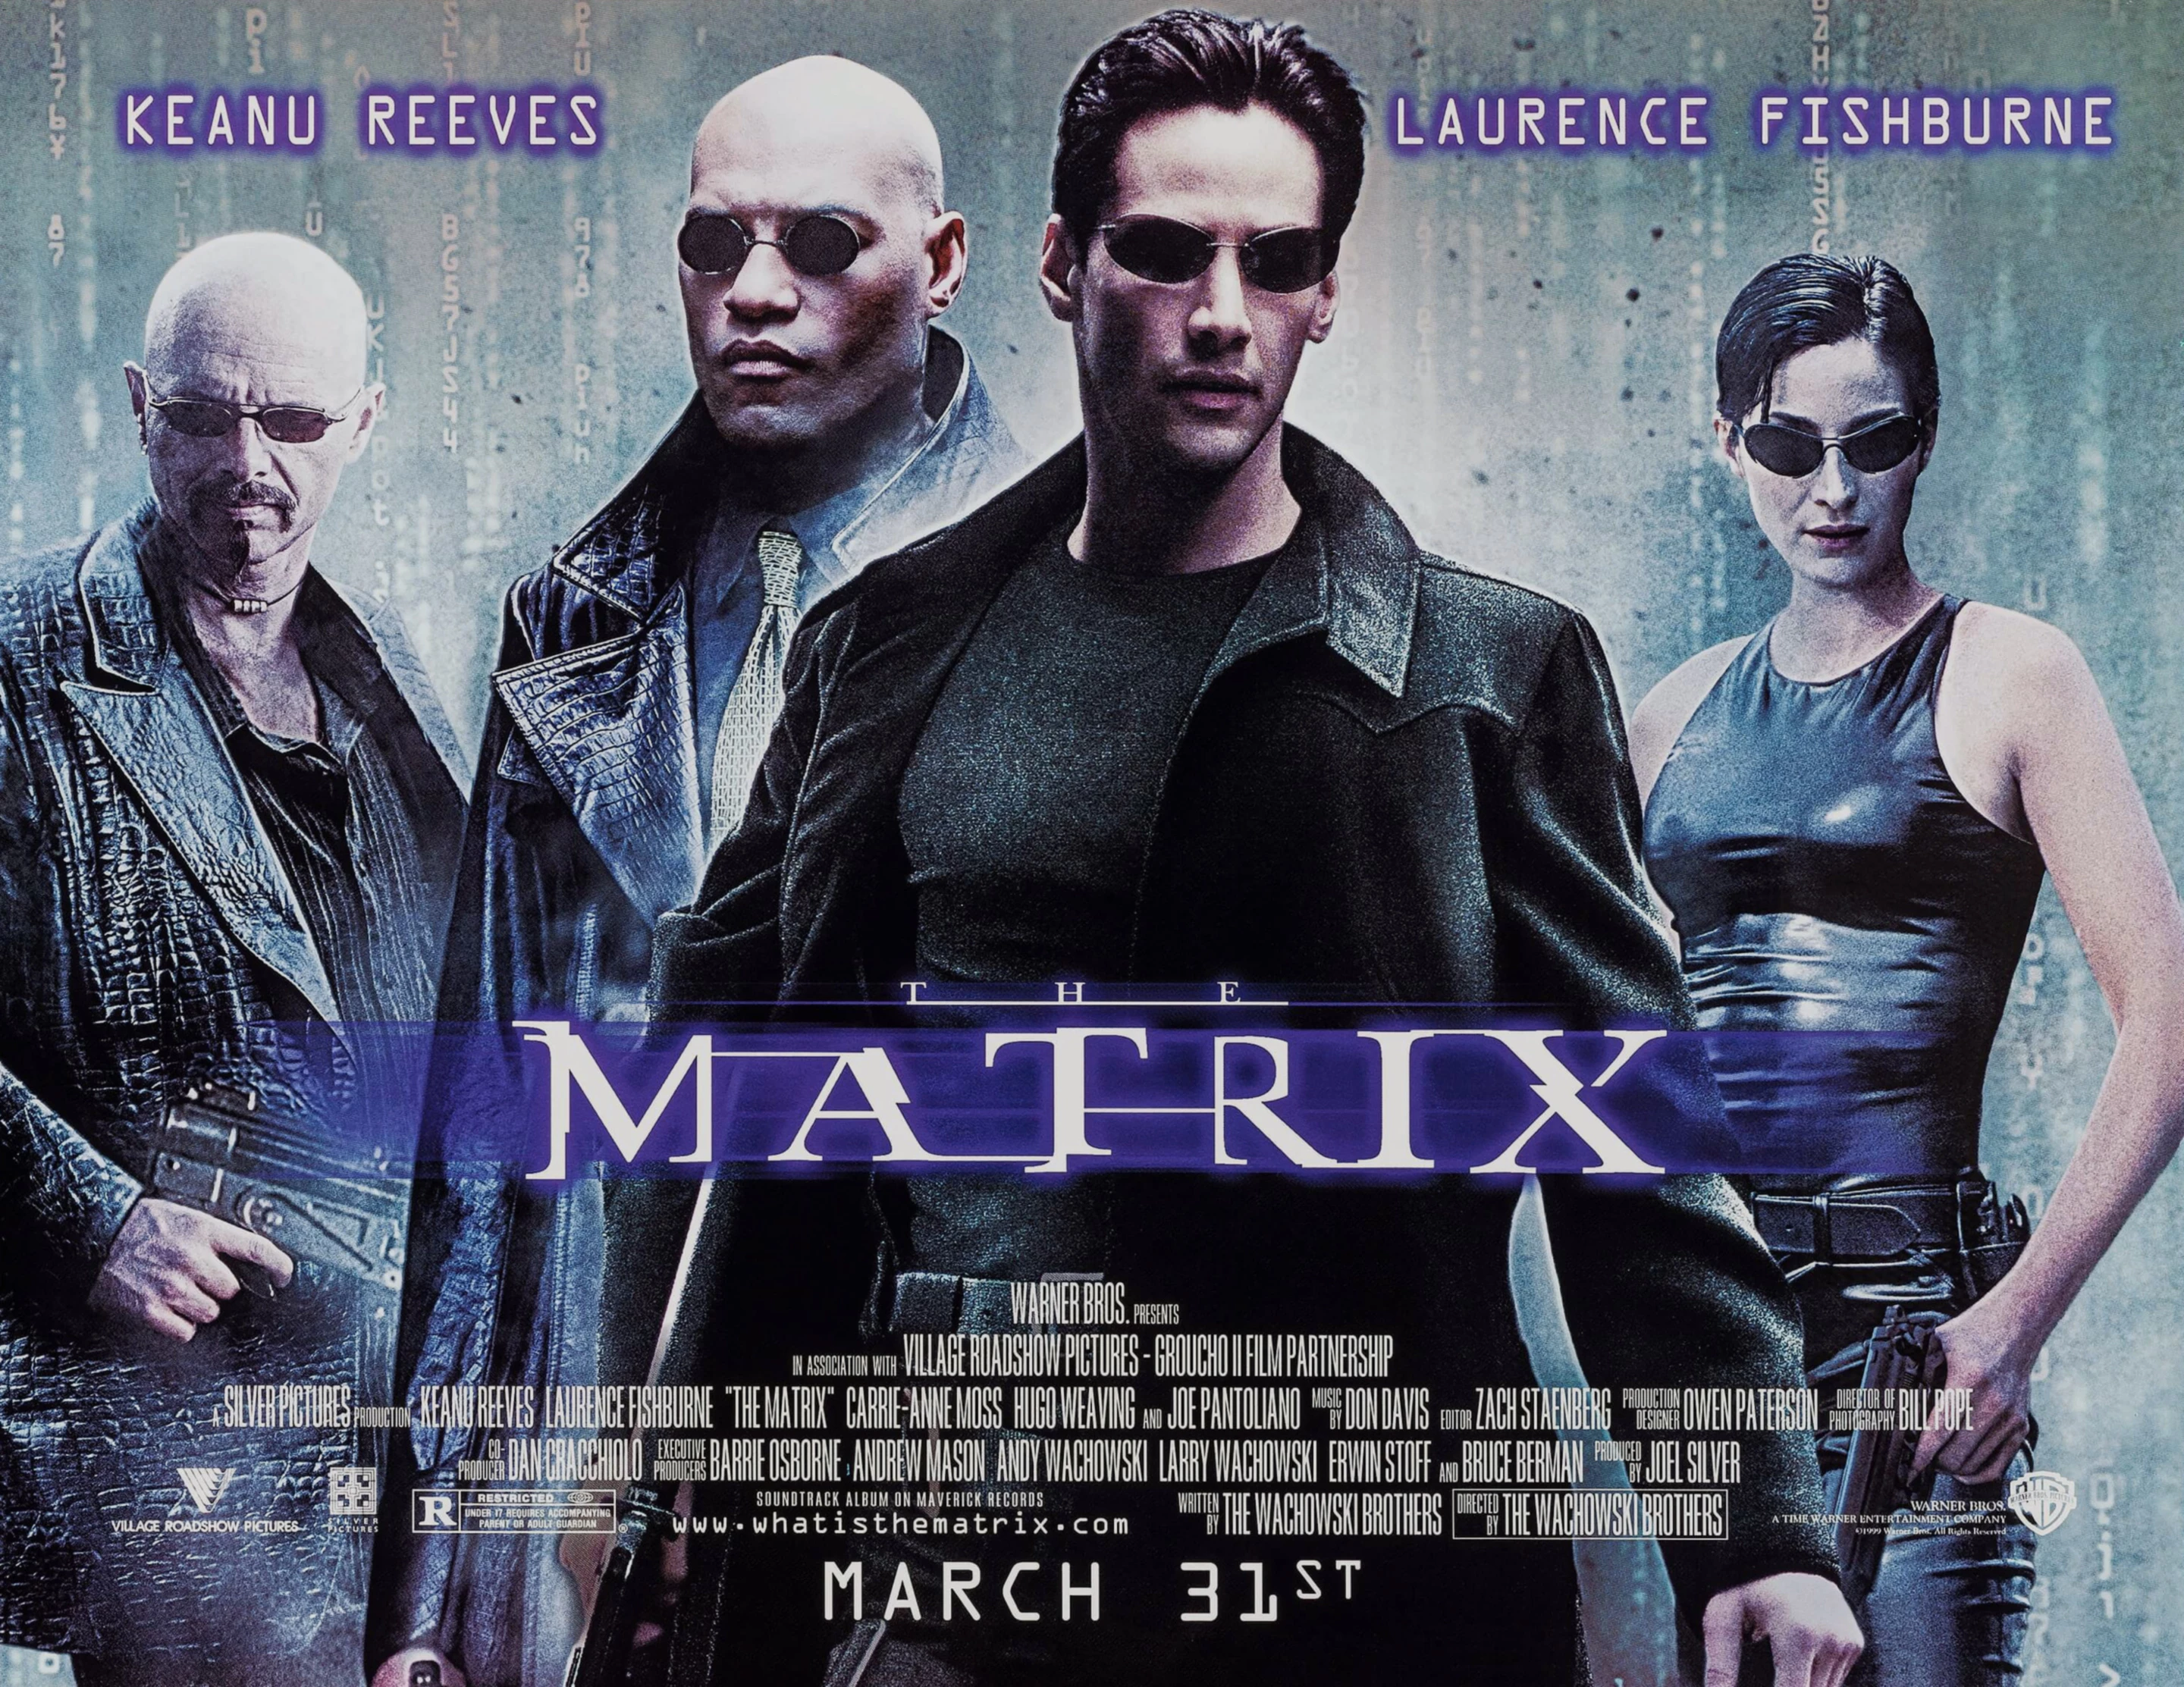 The Matrix (1999) - dystopian movie like Divergent